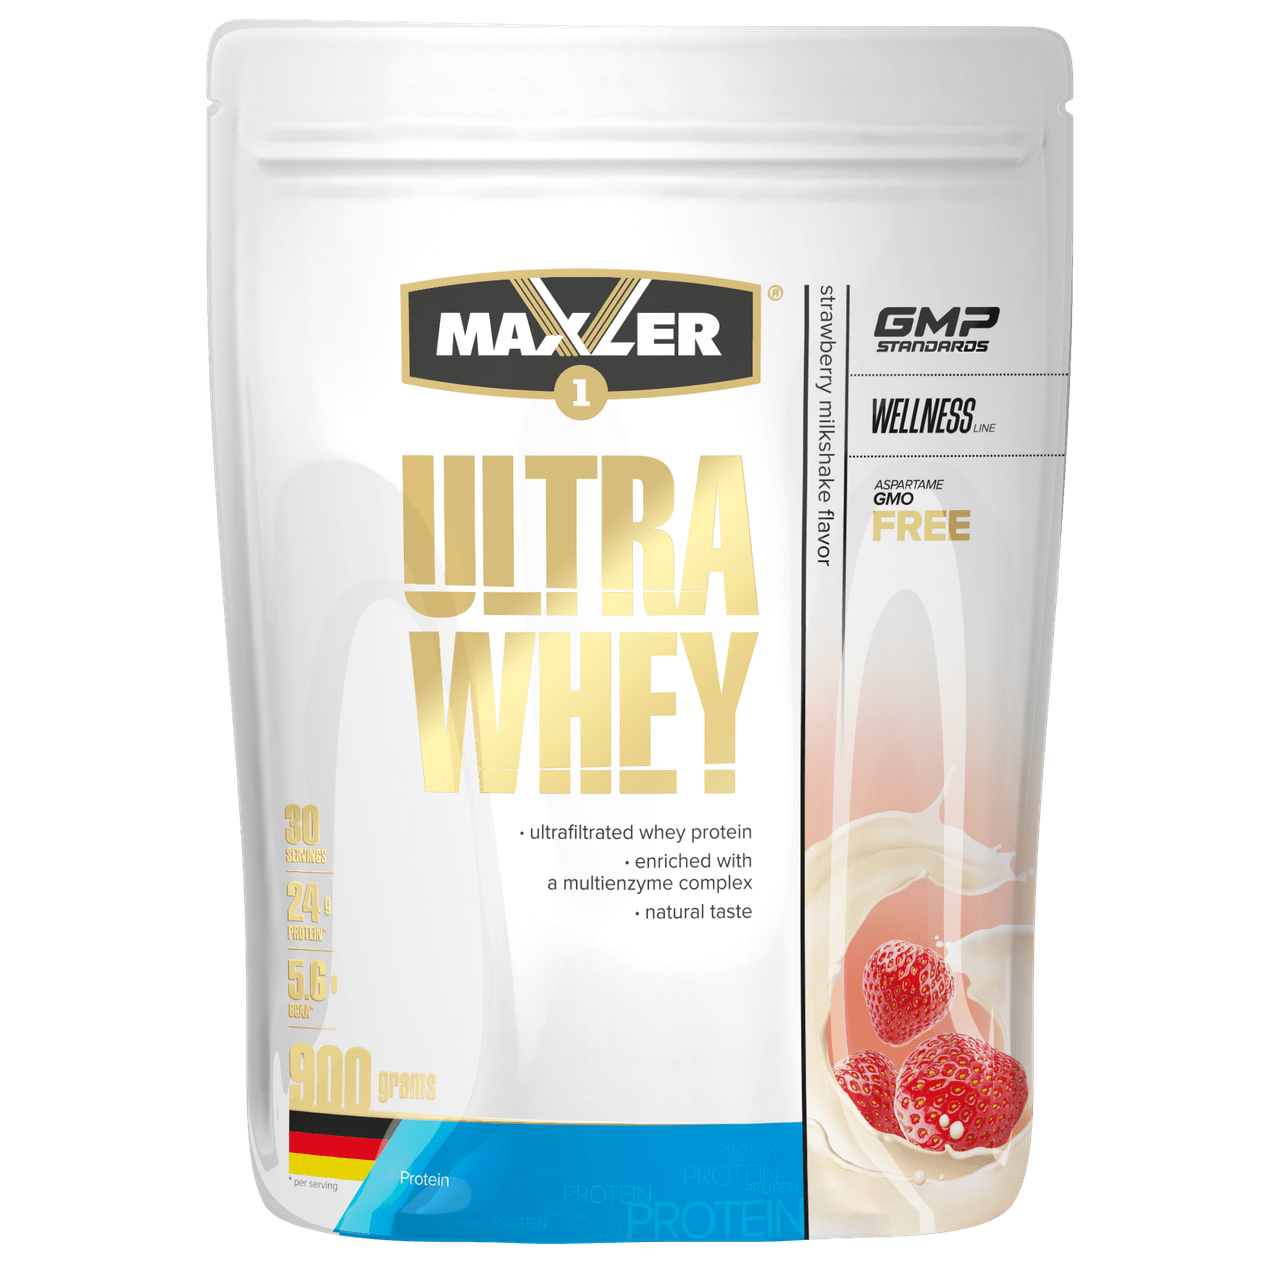 Maxler Maxler Ultra Whey 900 г – клубничный милкшейк, , 0.9 